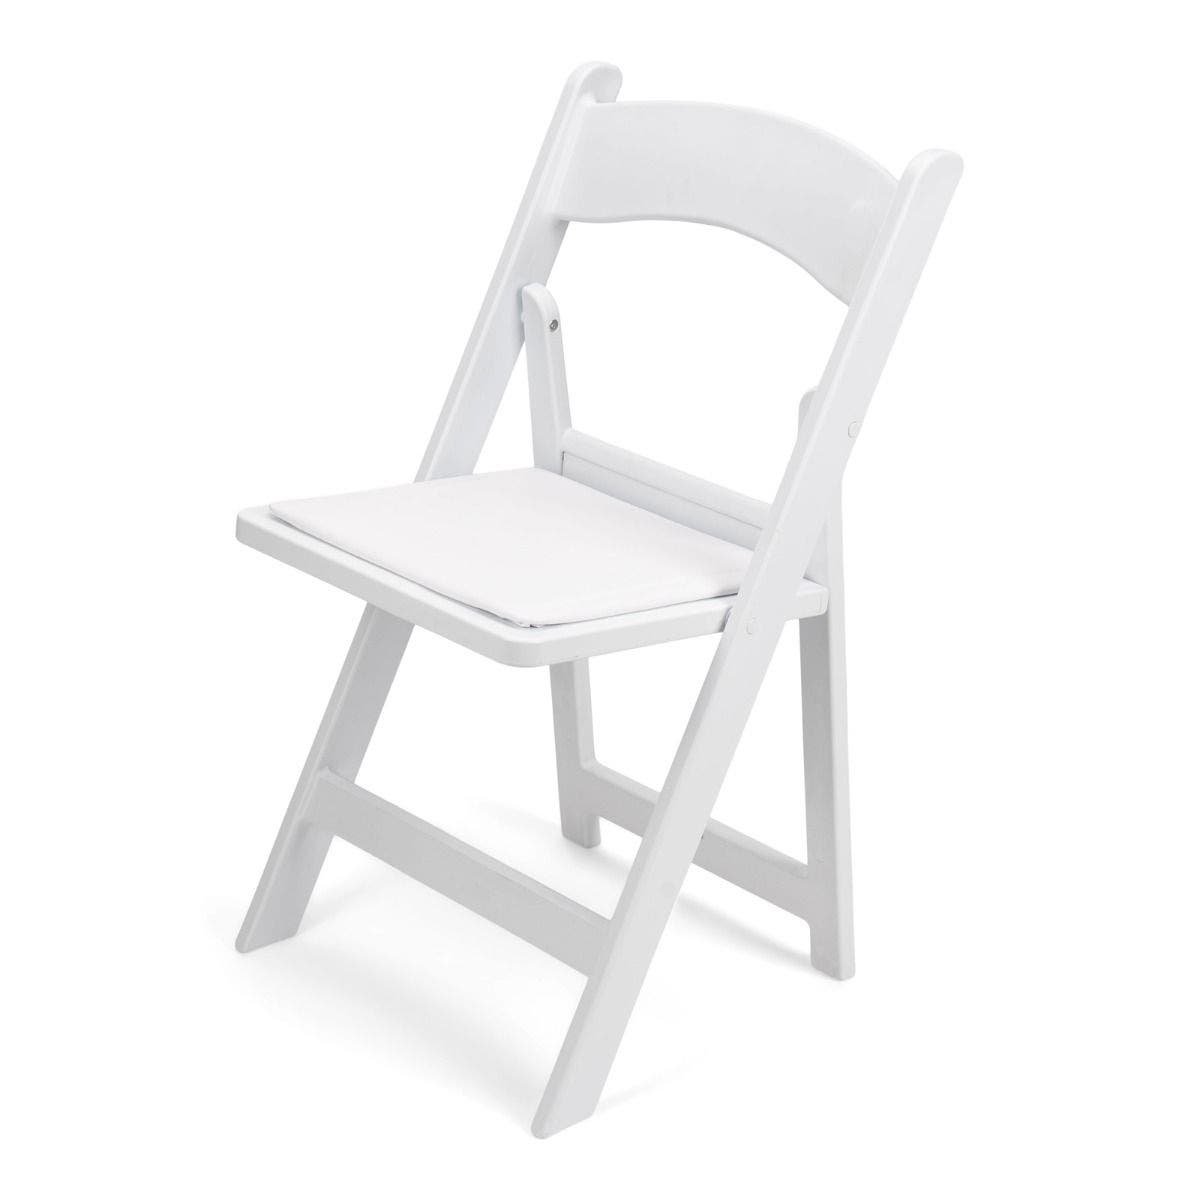 White Resin Folding Chair $2.75